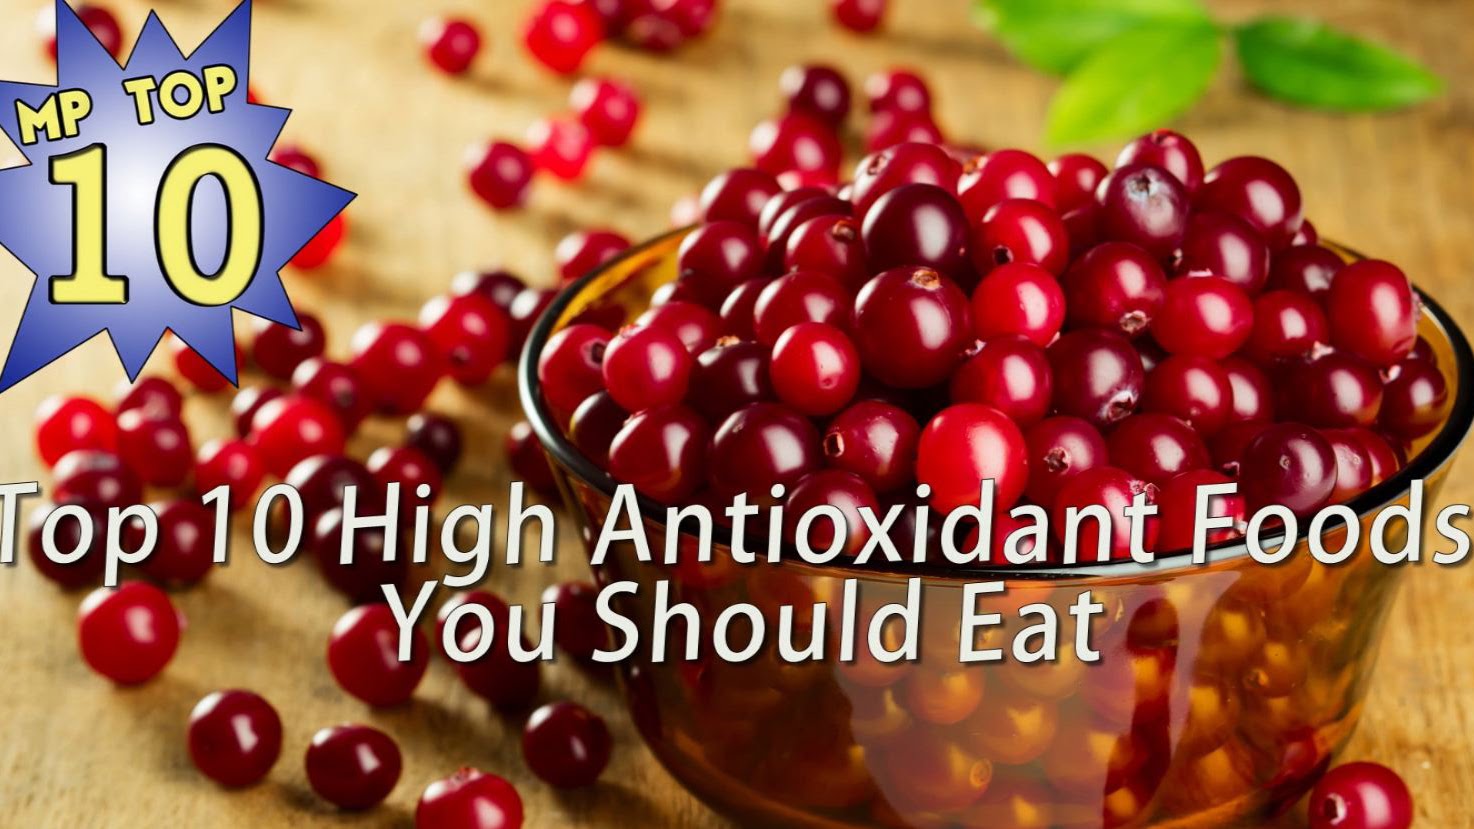 Top 10 High Antioxidant Foods You Should Eat